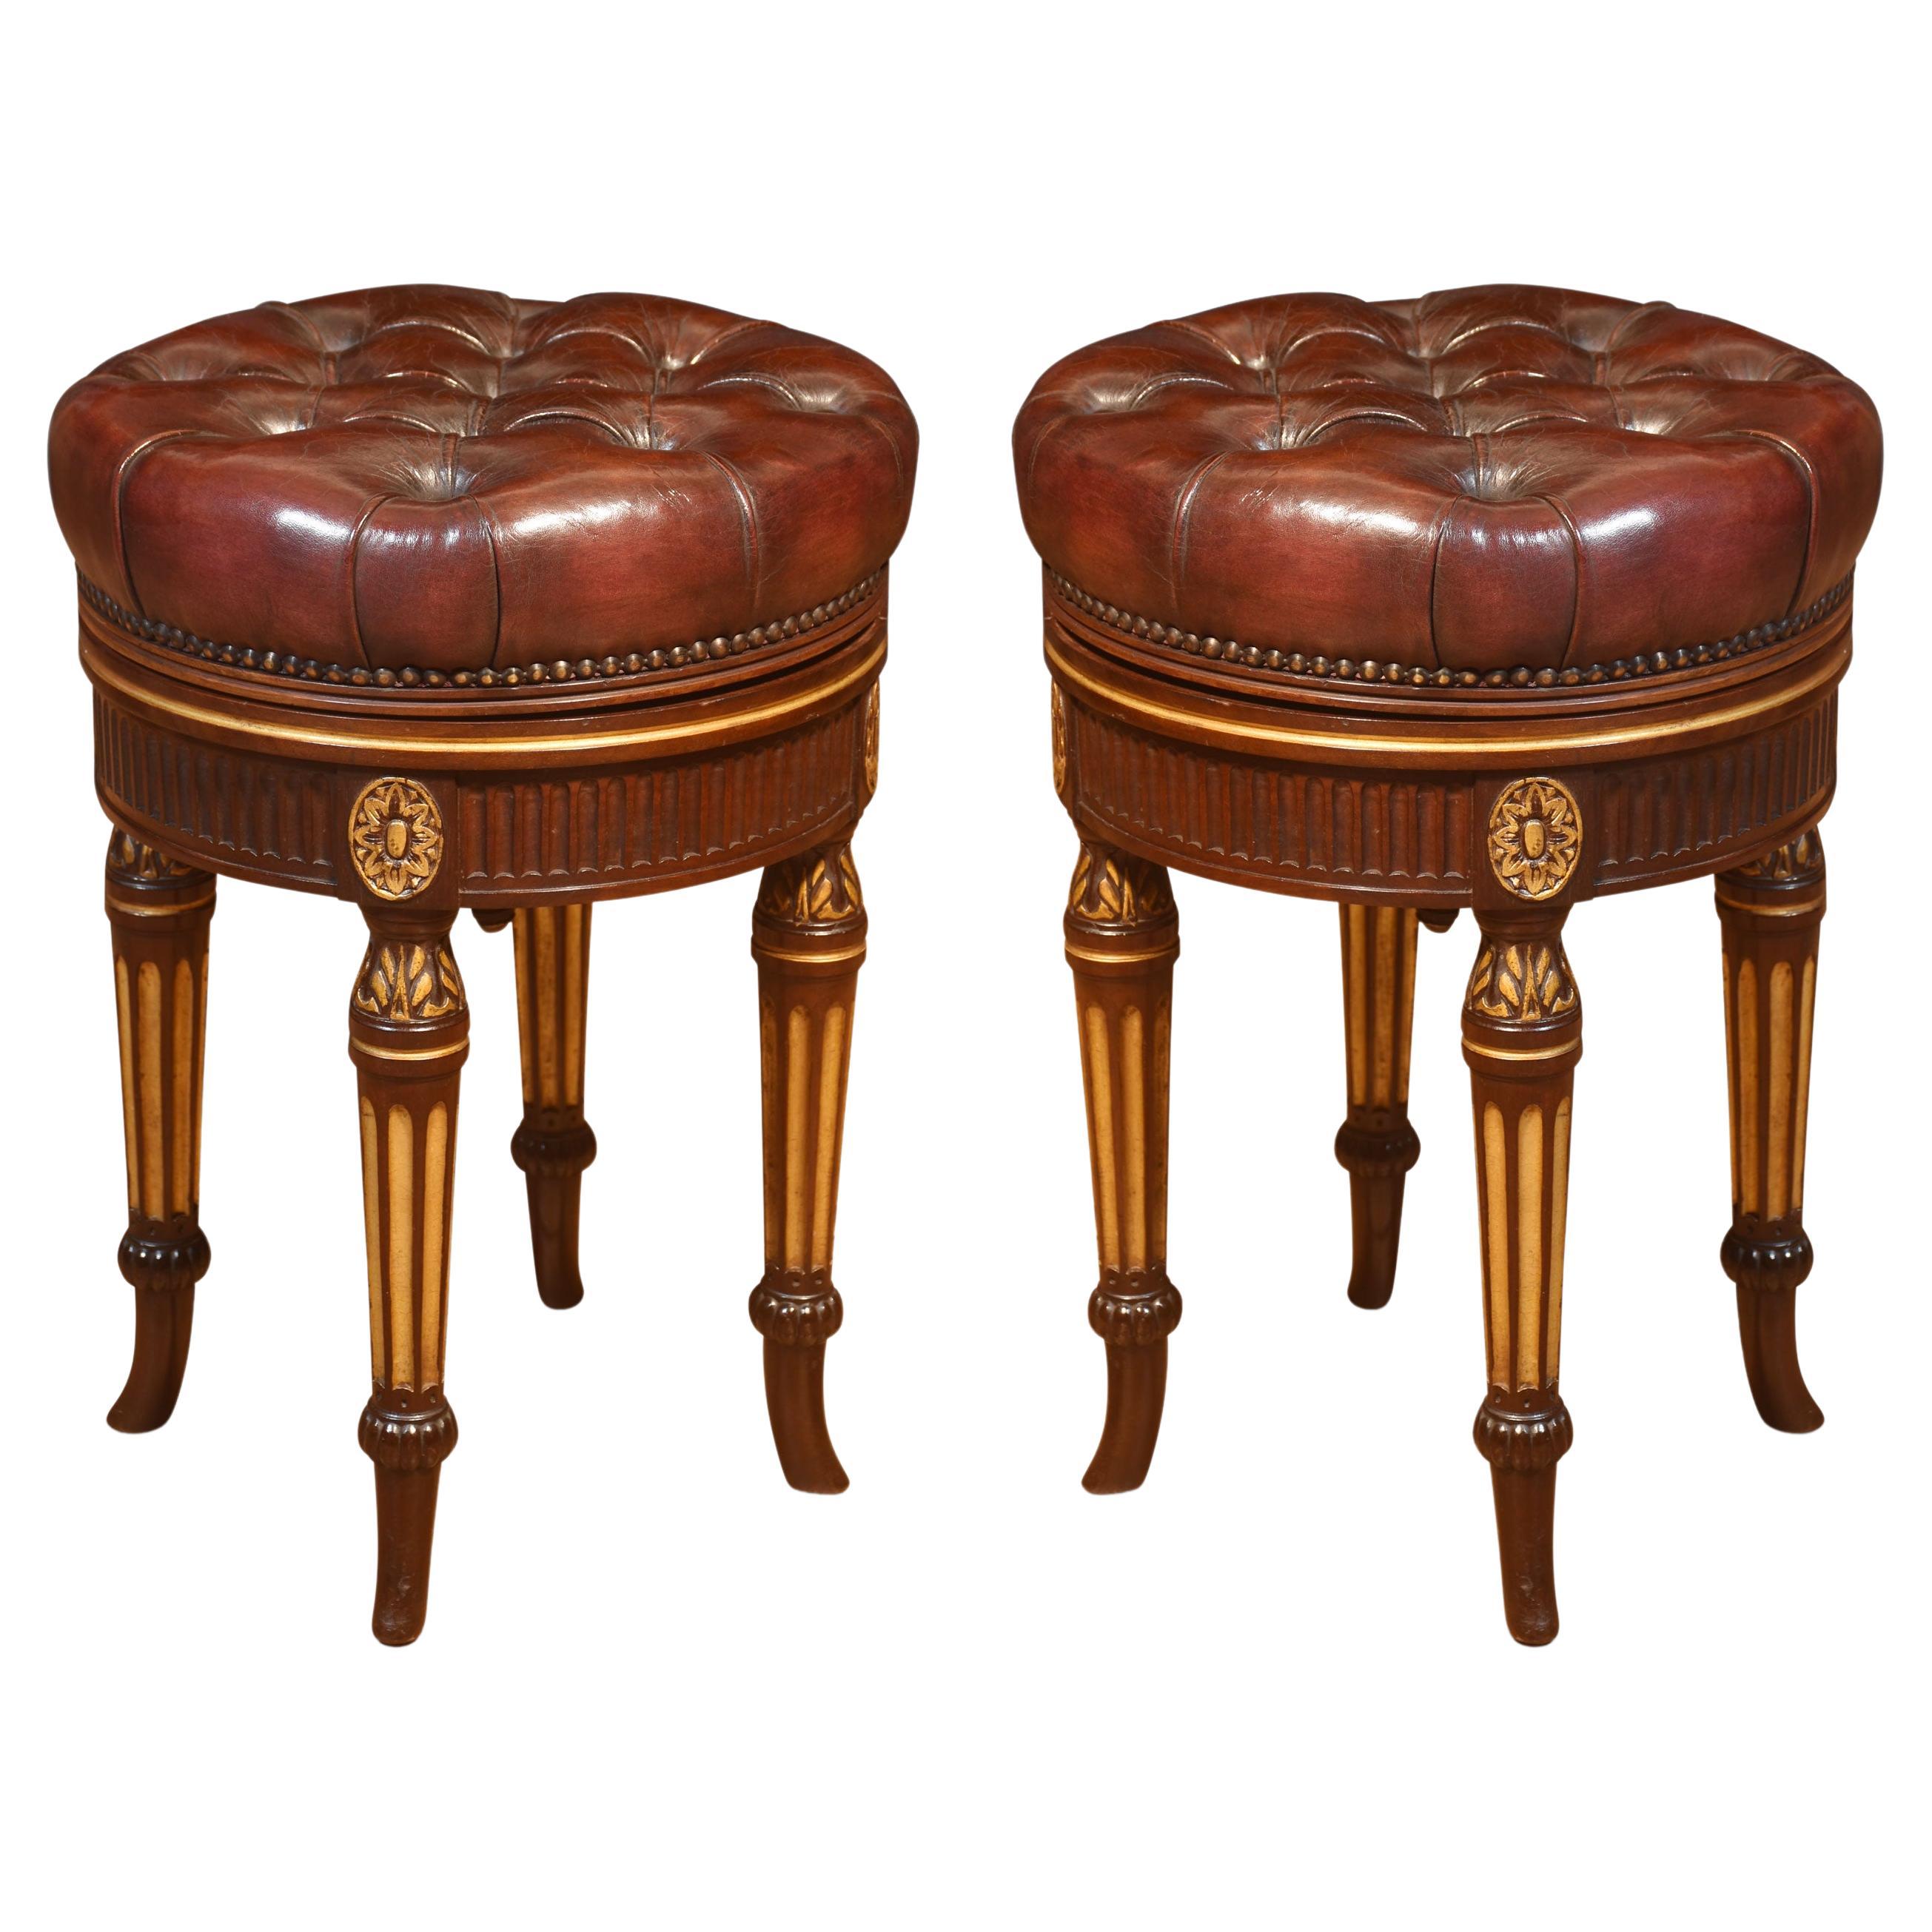 Pair of 19th Century adjustable stools